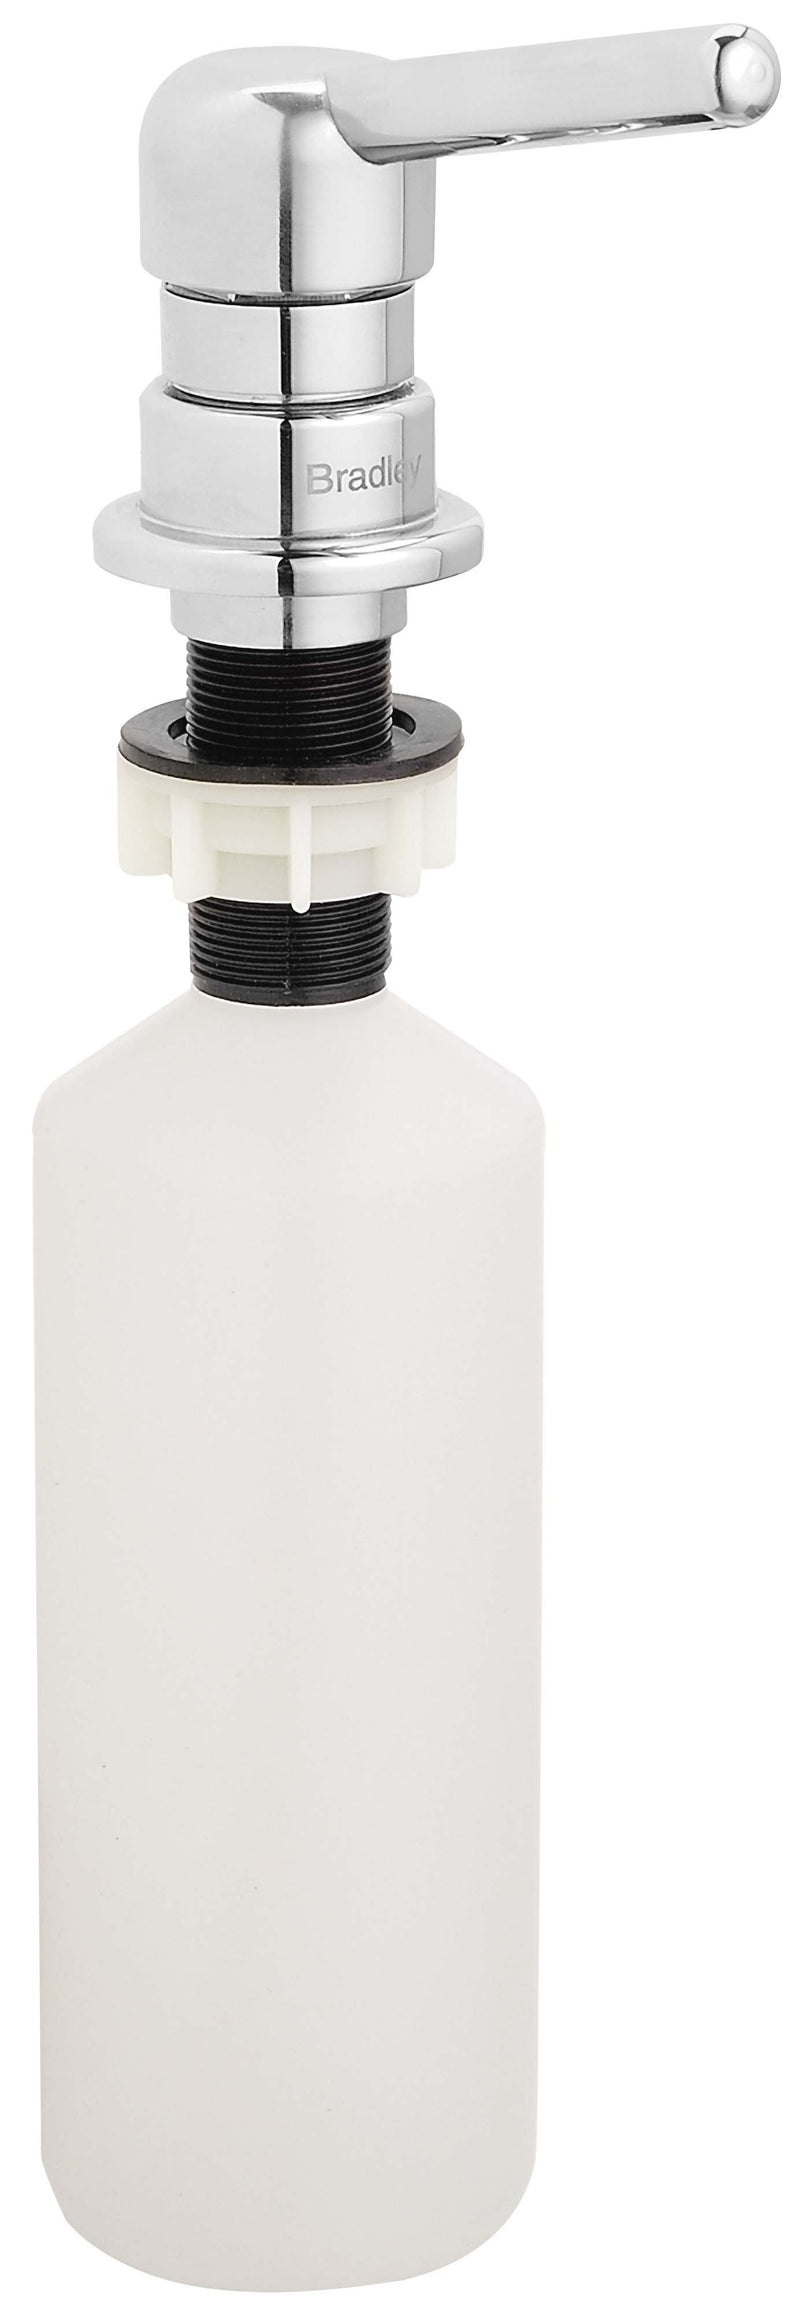 Bradley Liquid Soap Dispenser, 6334-00